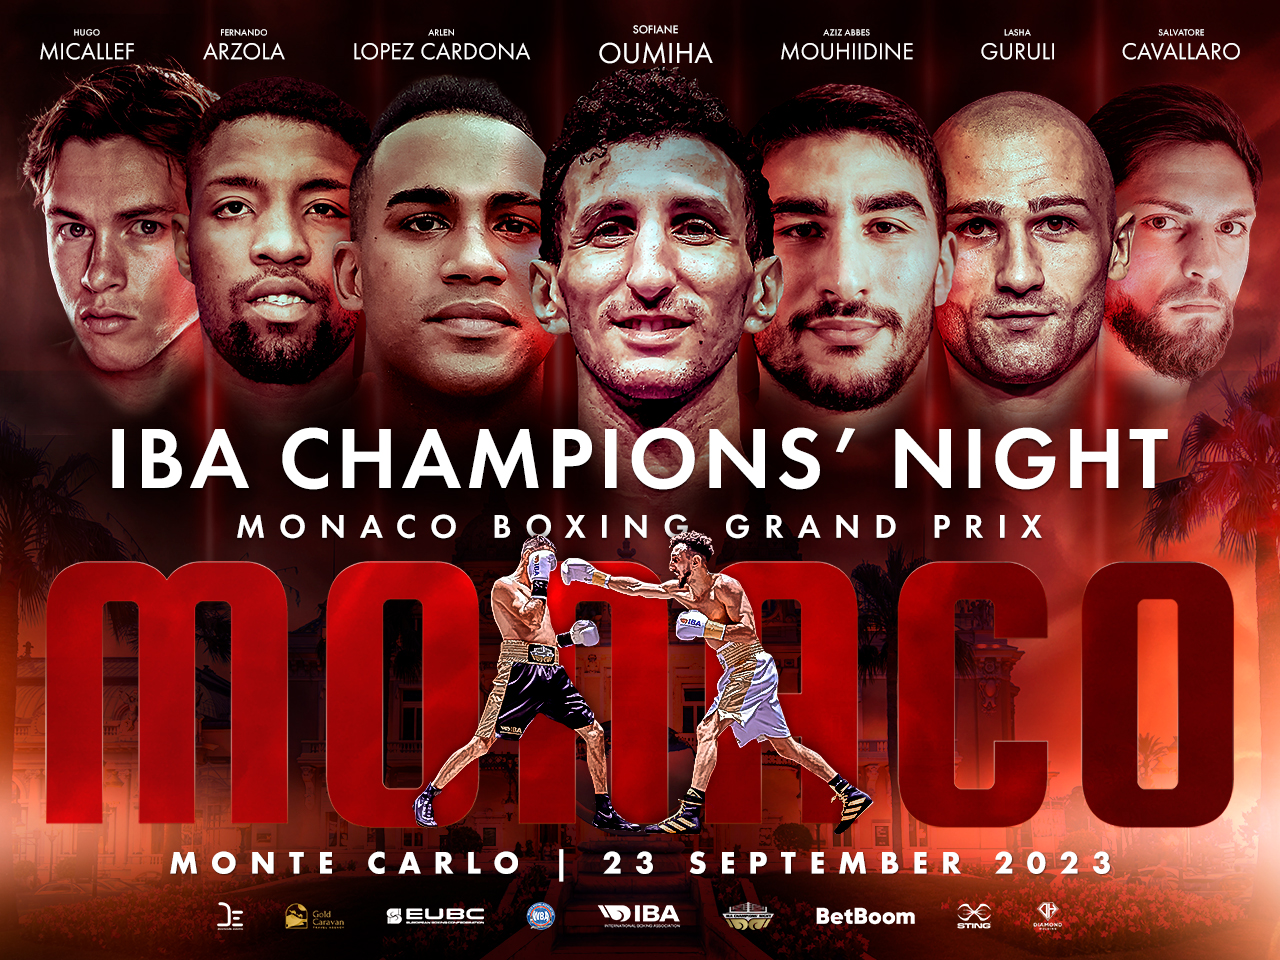 IBA Champions’ Night Highlights